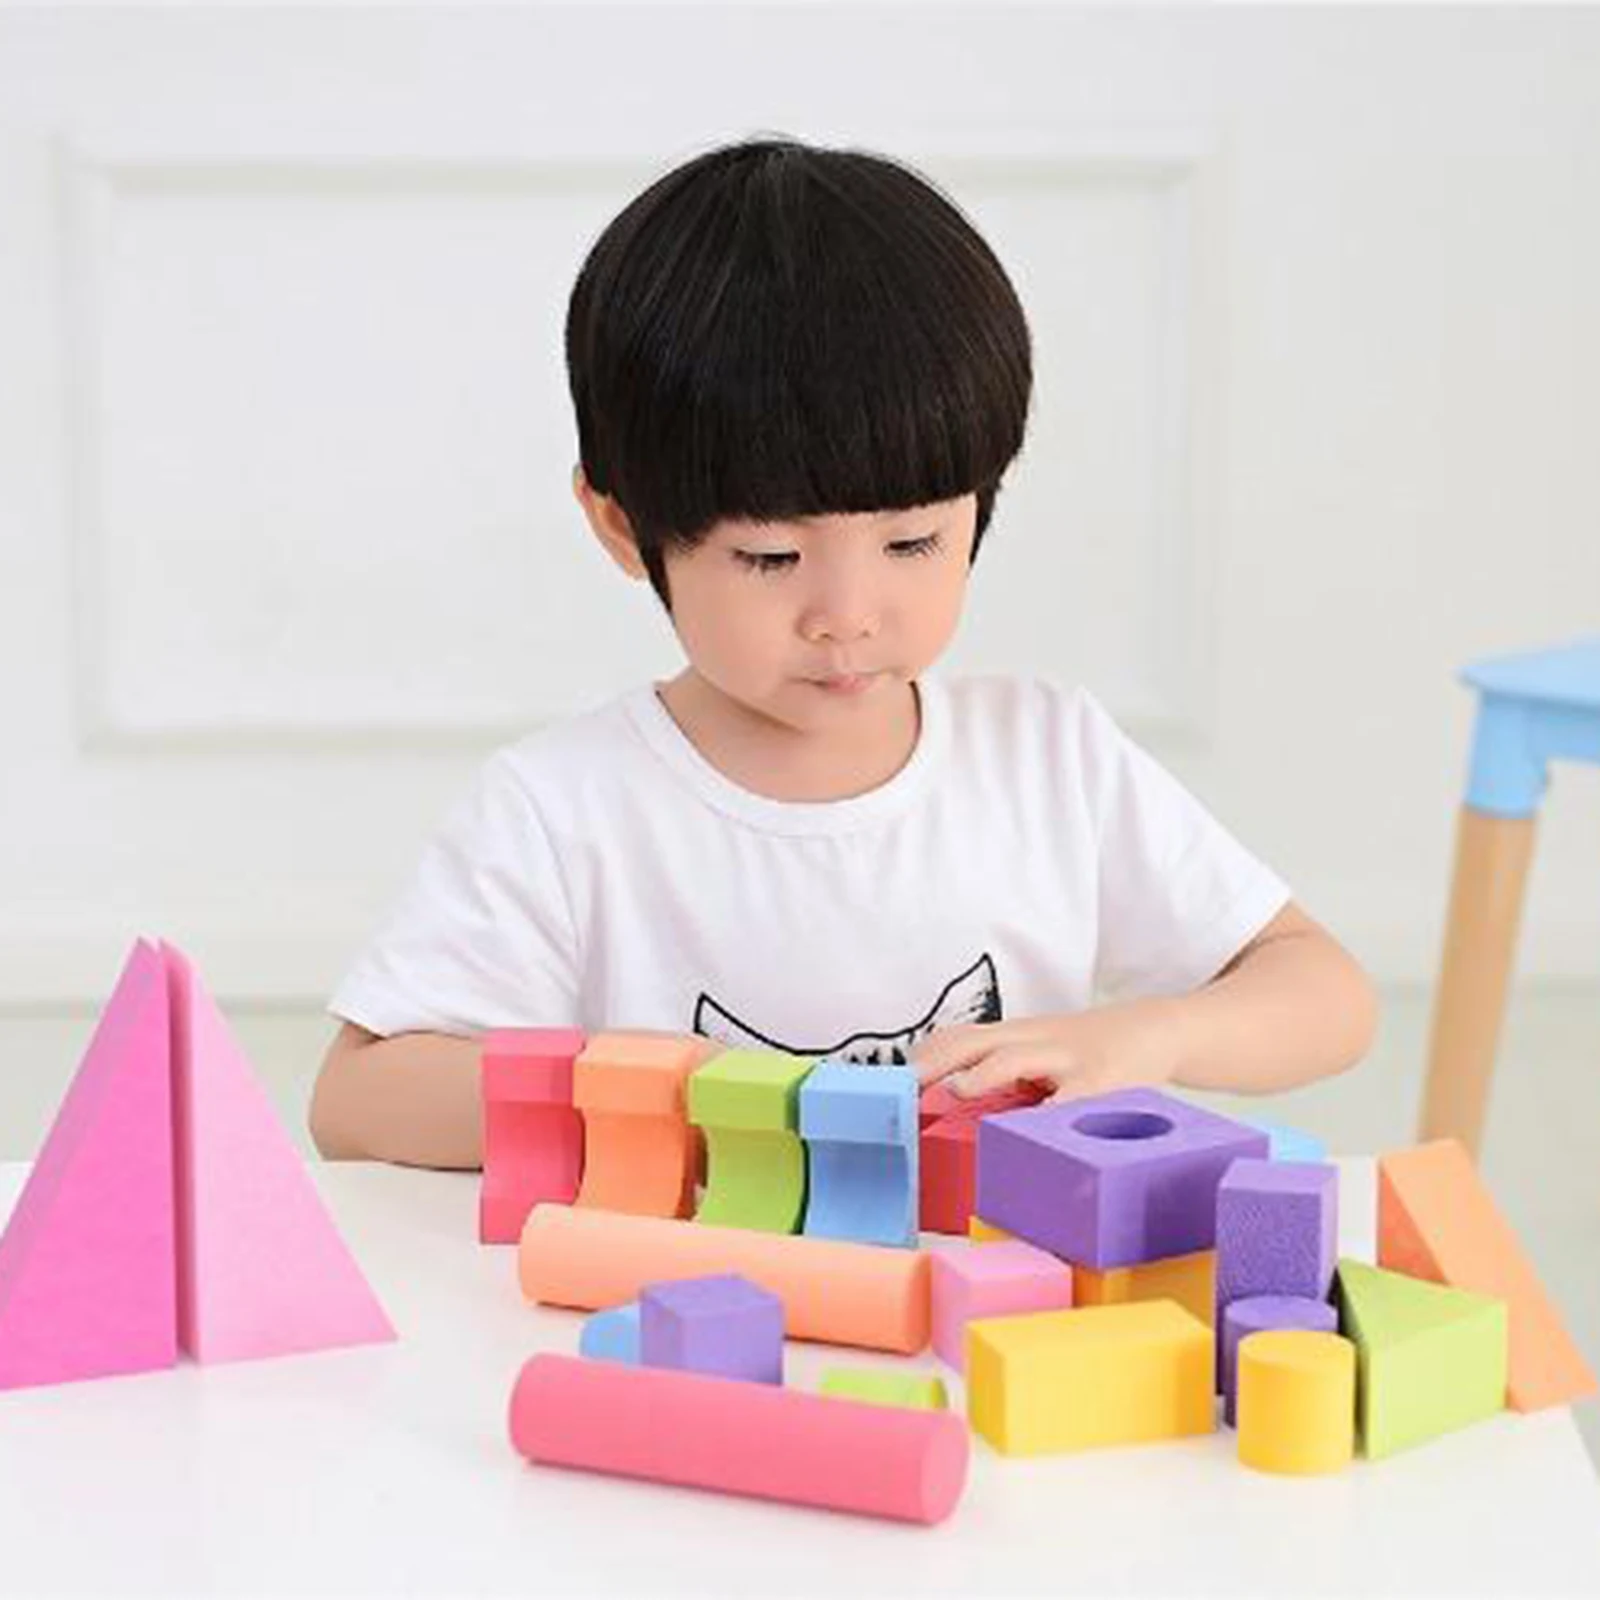 25pcs Foam Building Blocks Multi-colored Stacking Blocks Construction Toys